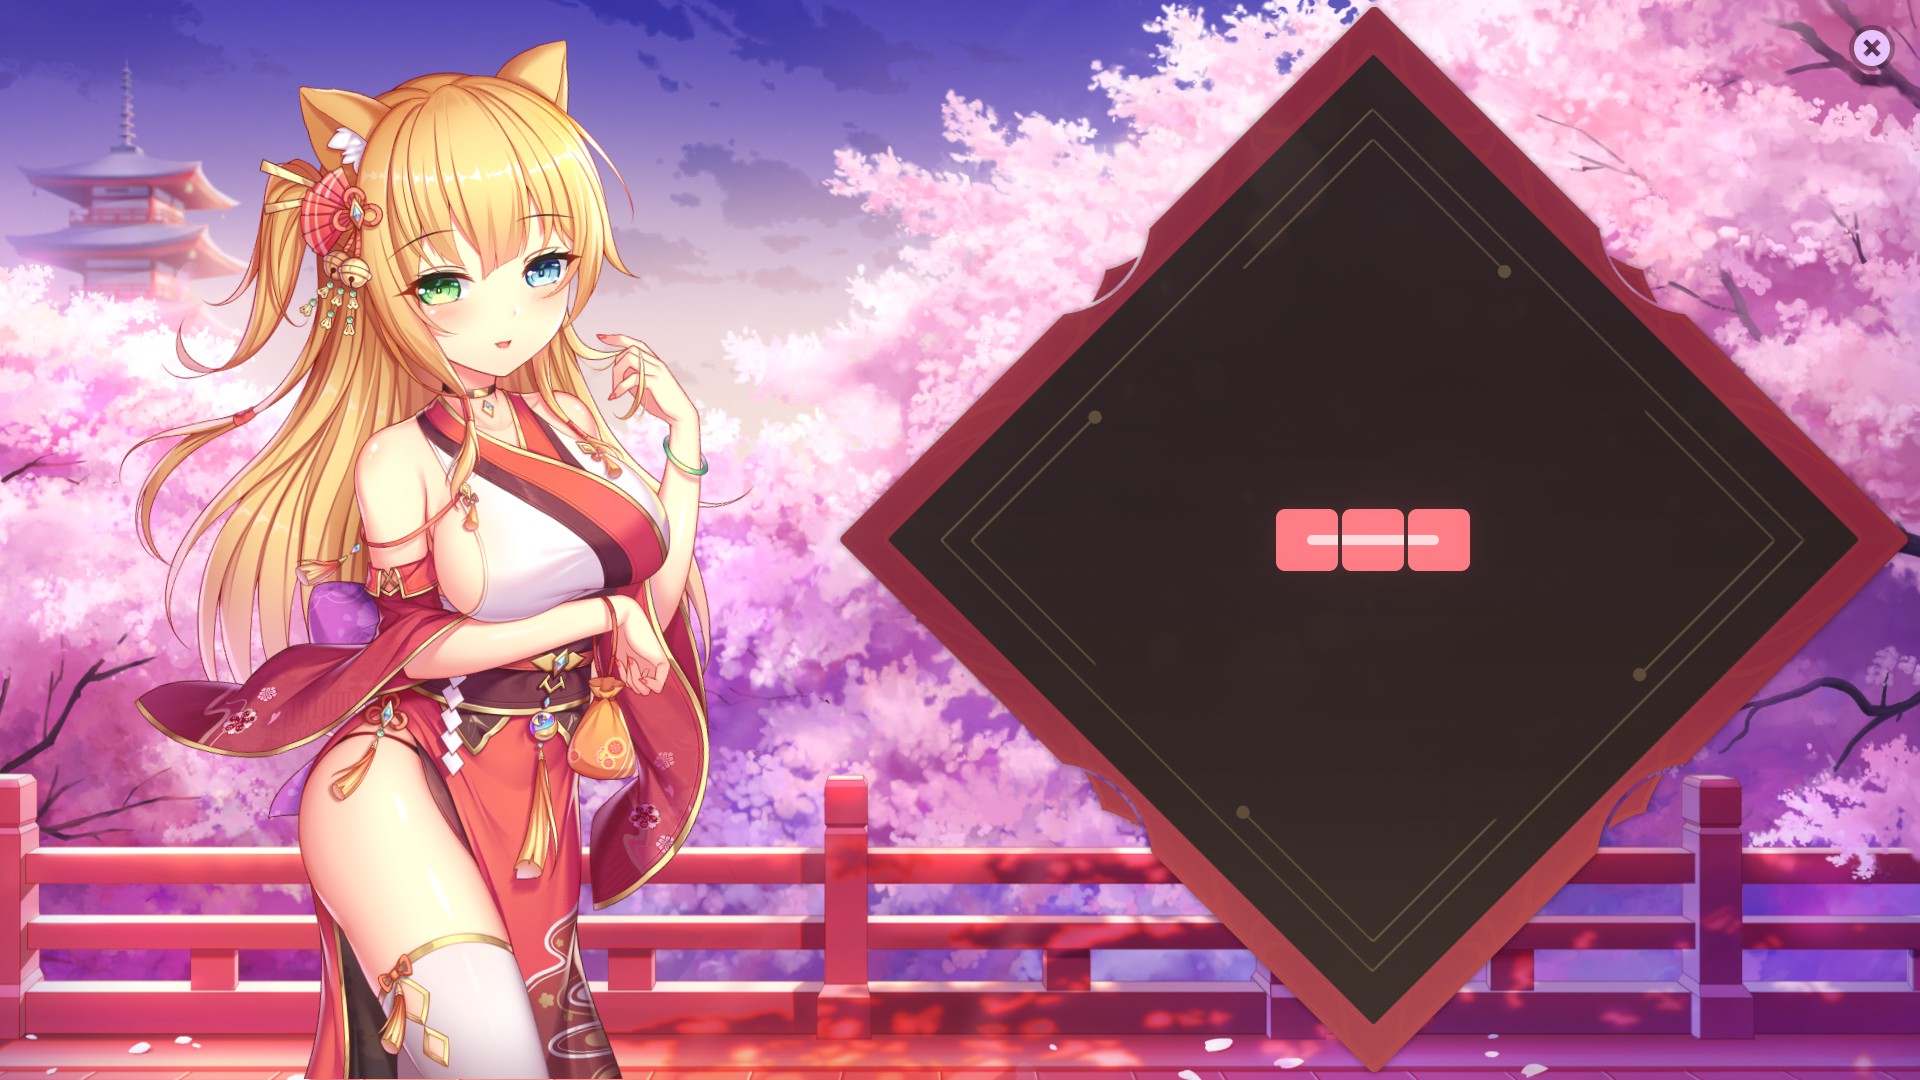 Sakura Hime 2 - Complete Achievement Guide +Walkthrough - Images of completed levels - 3623DE1